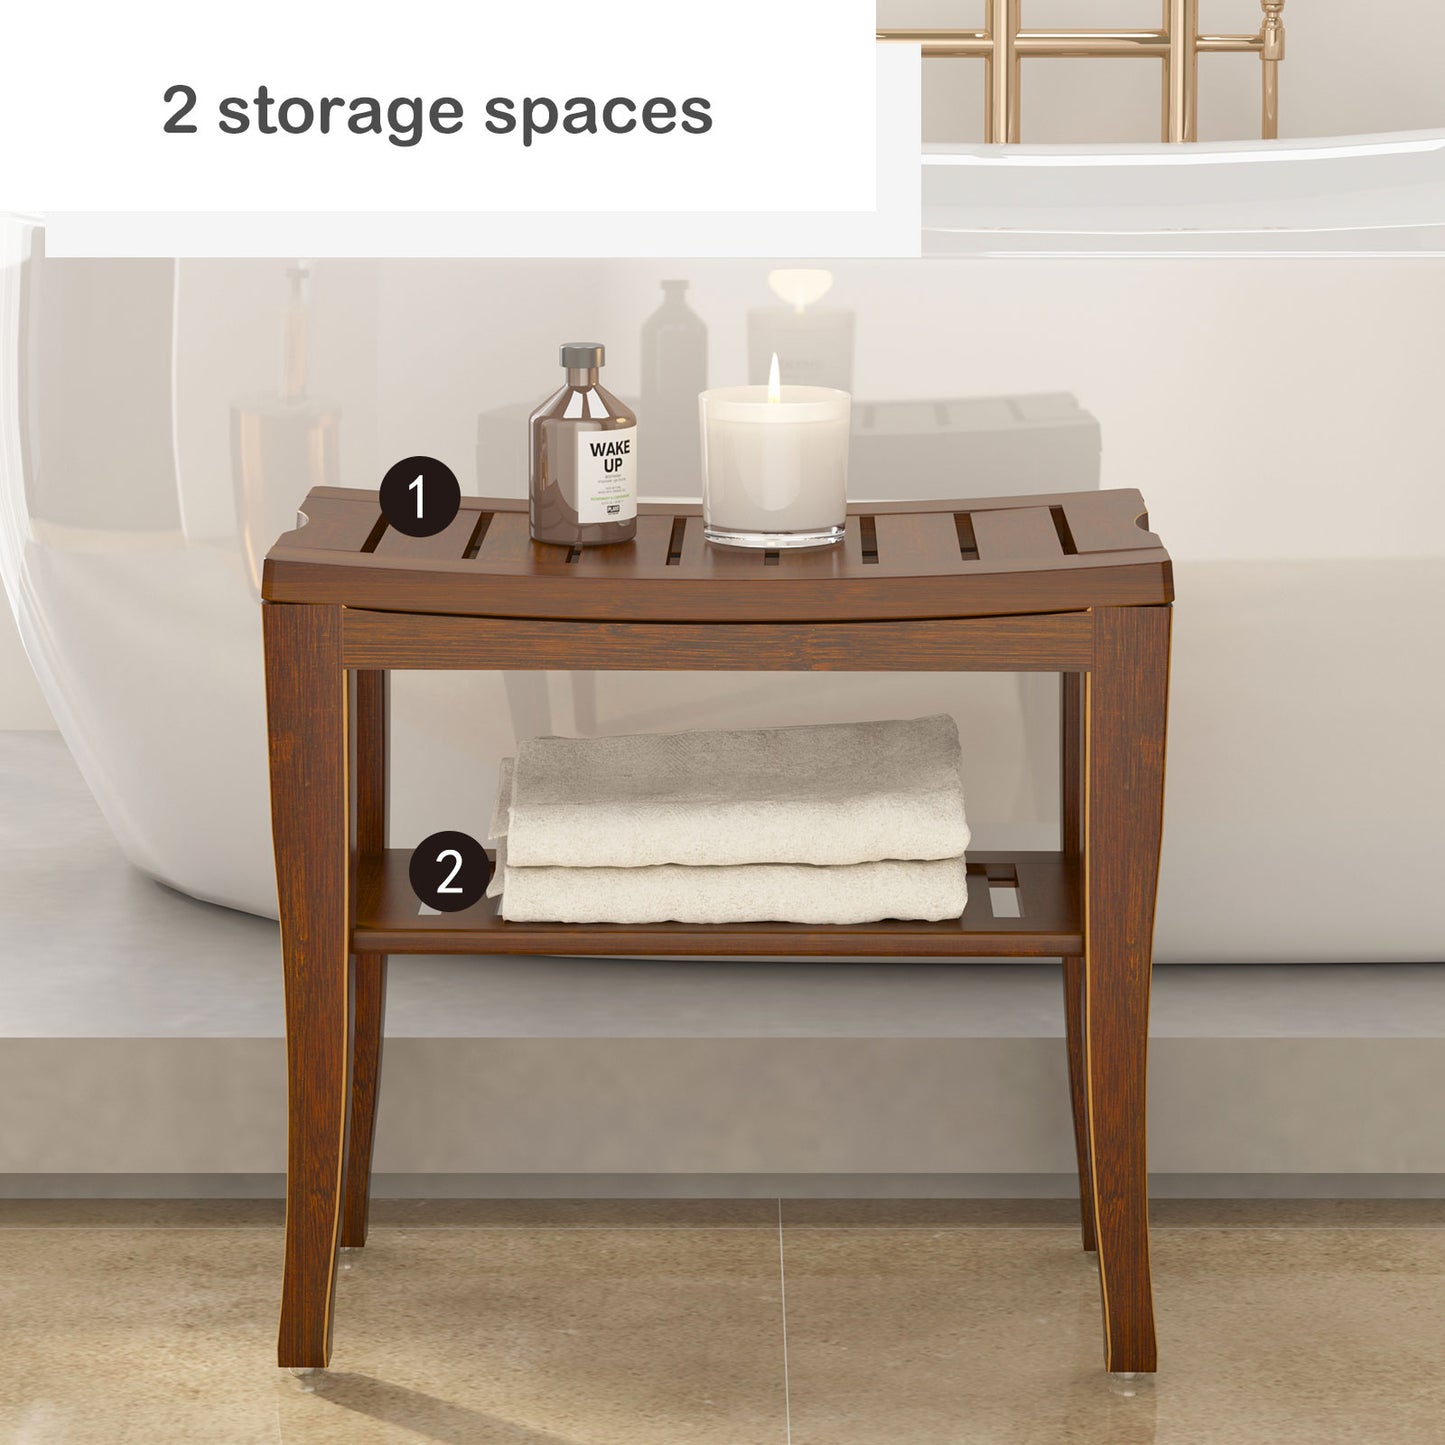 SogesPower Bathroom Bench Bamboo Wood Shower Stool Non-slip Waterproof Shower Seat with Storage Shelf